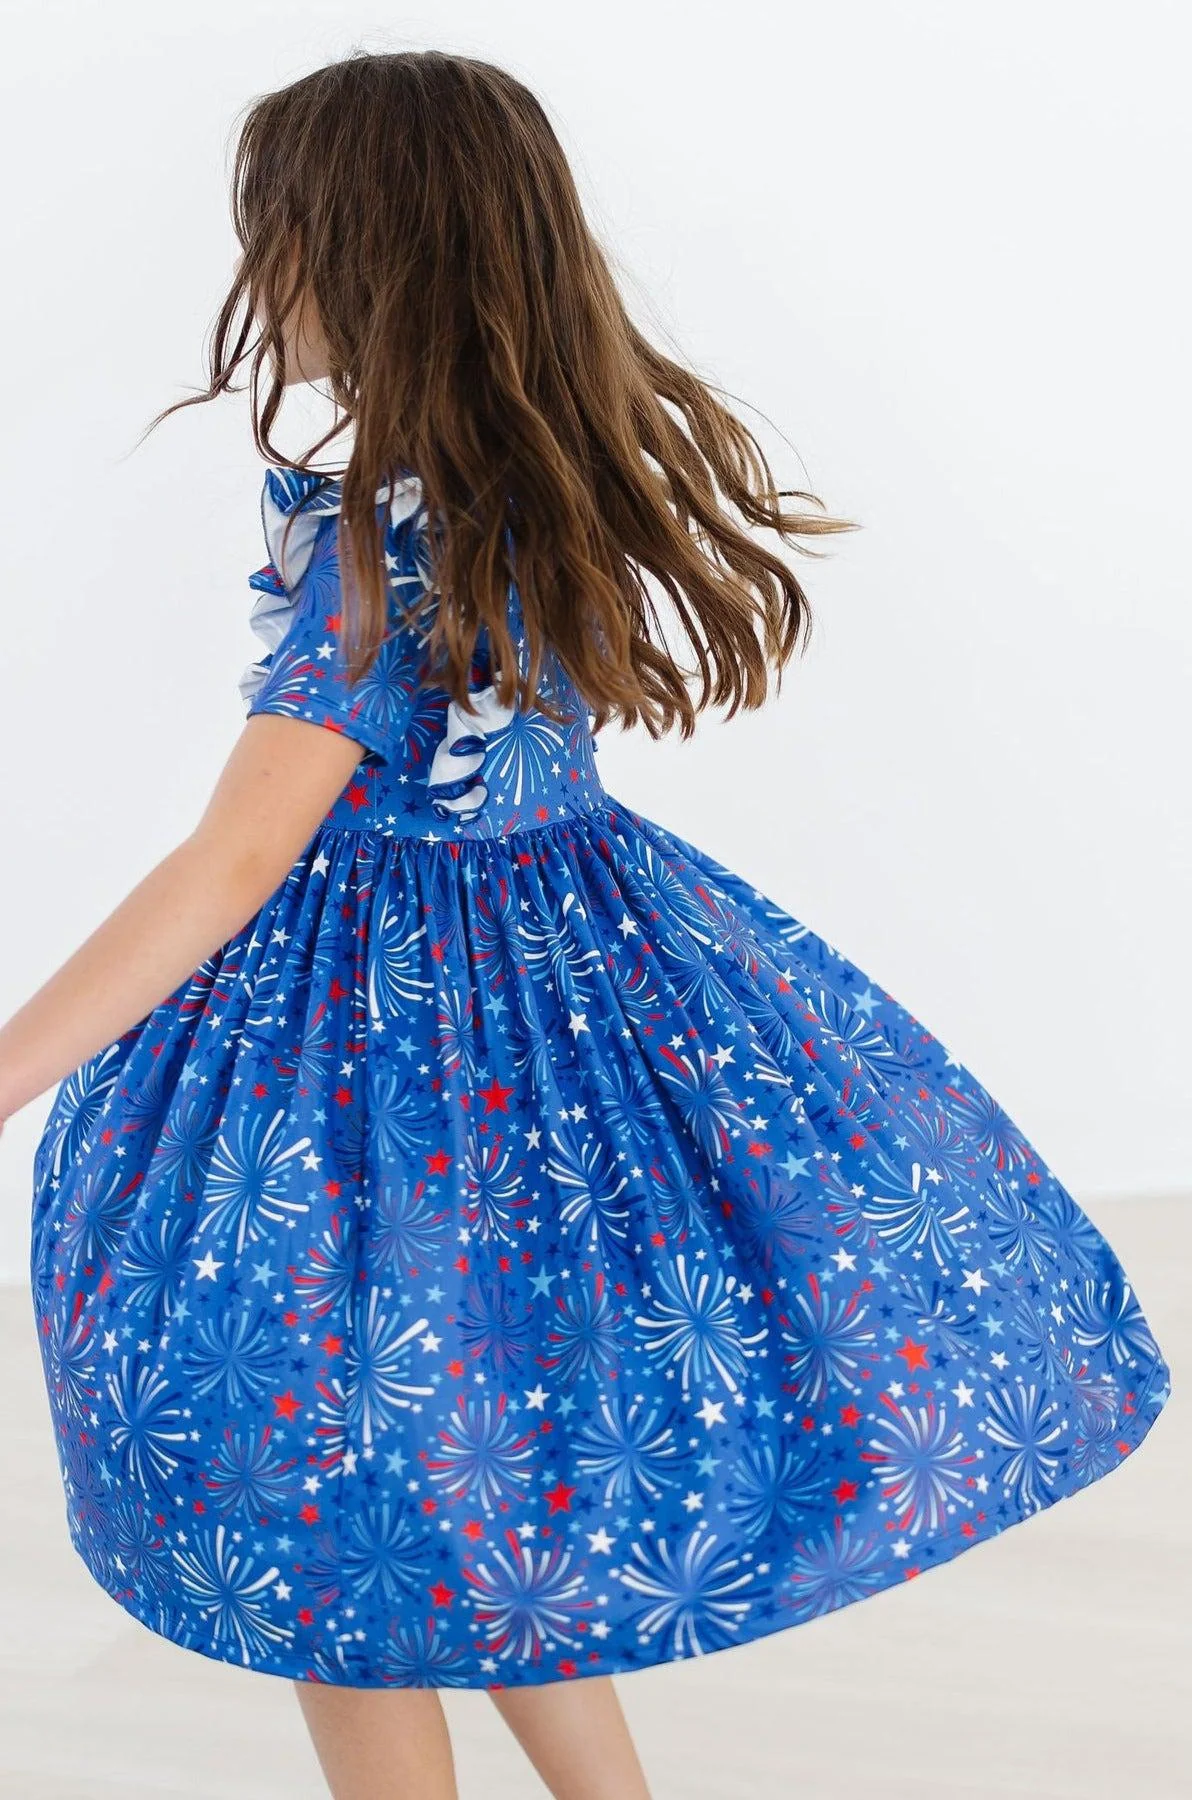 Spark-Tacular Girls Twirl Dress